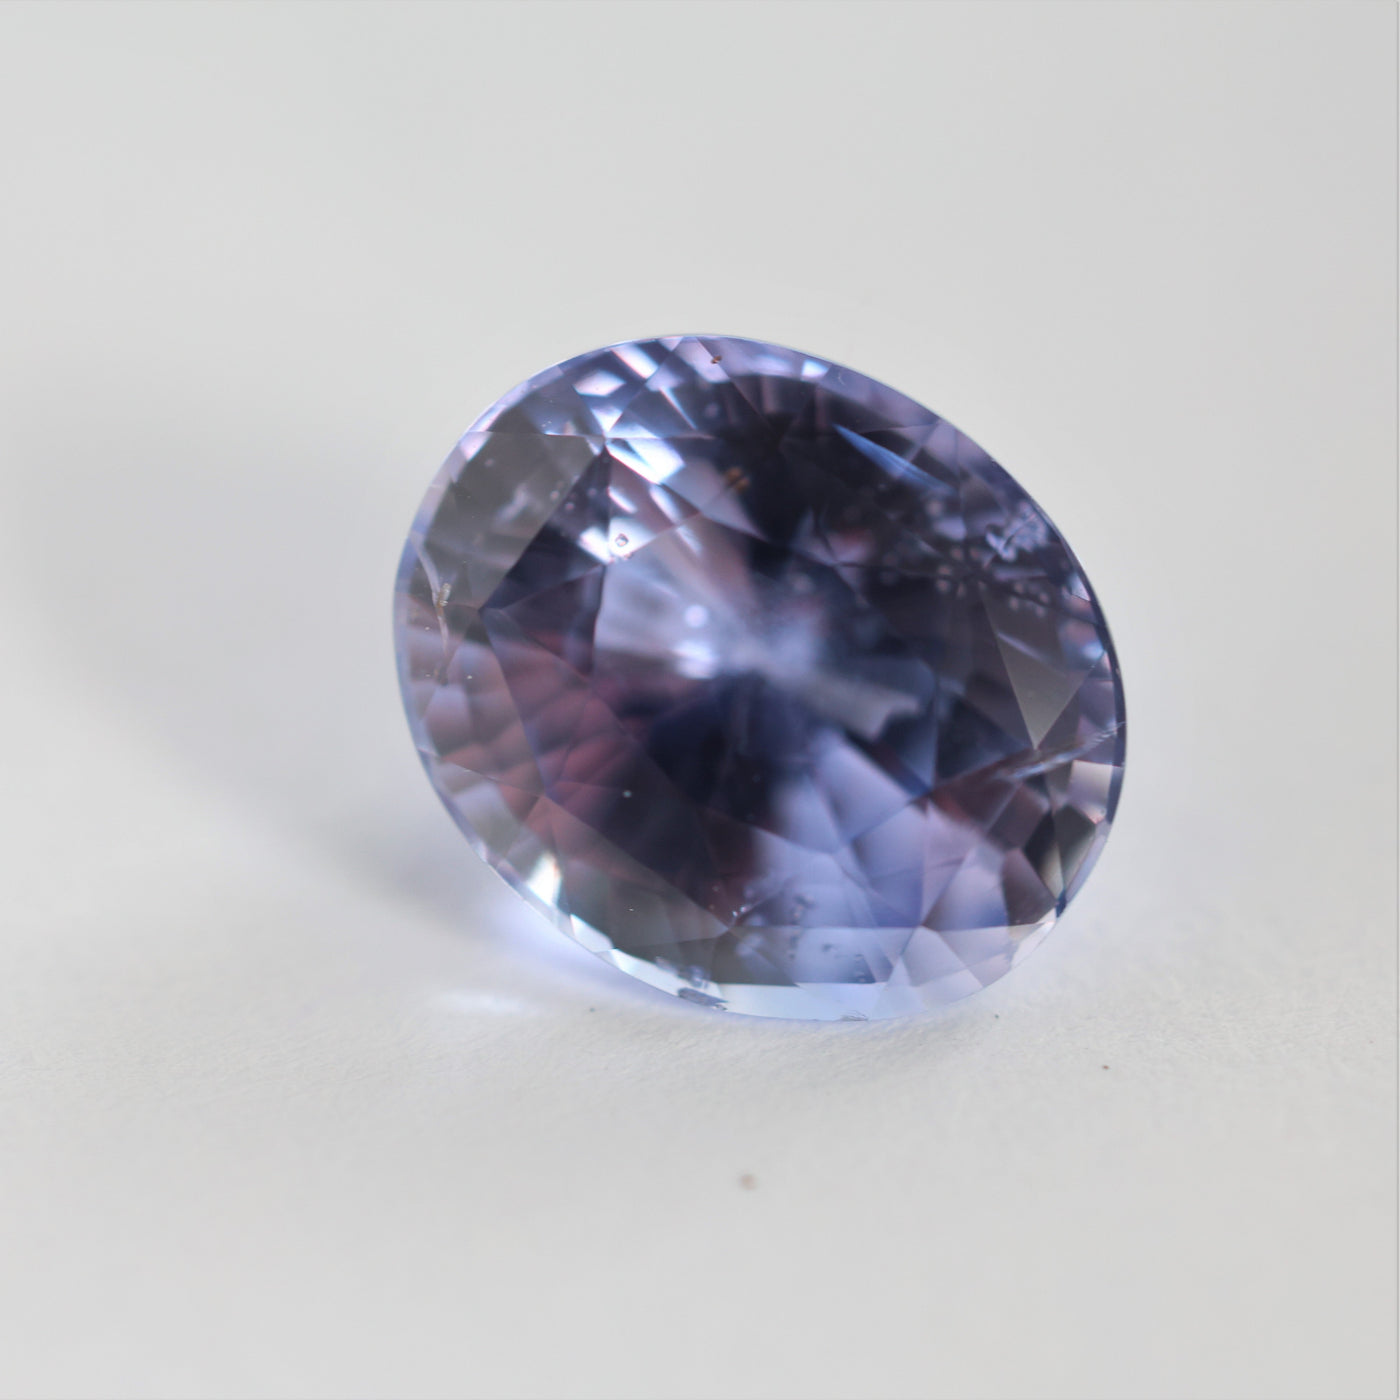 Loose oval-shaped purple sapphire settings